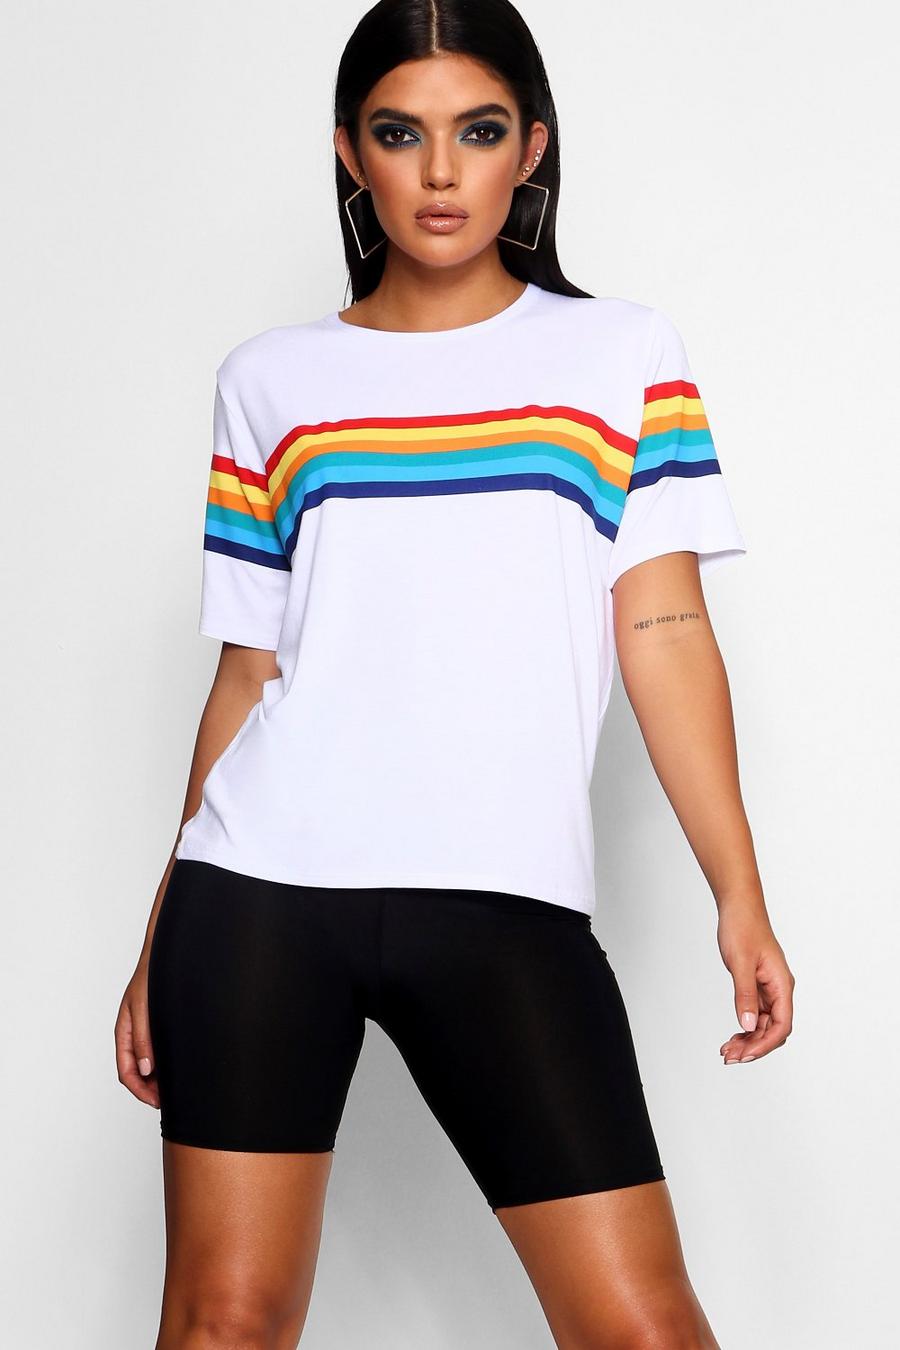 Camiseta extragrande de arcoíris en pecho y manga image number 1